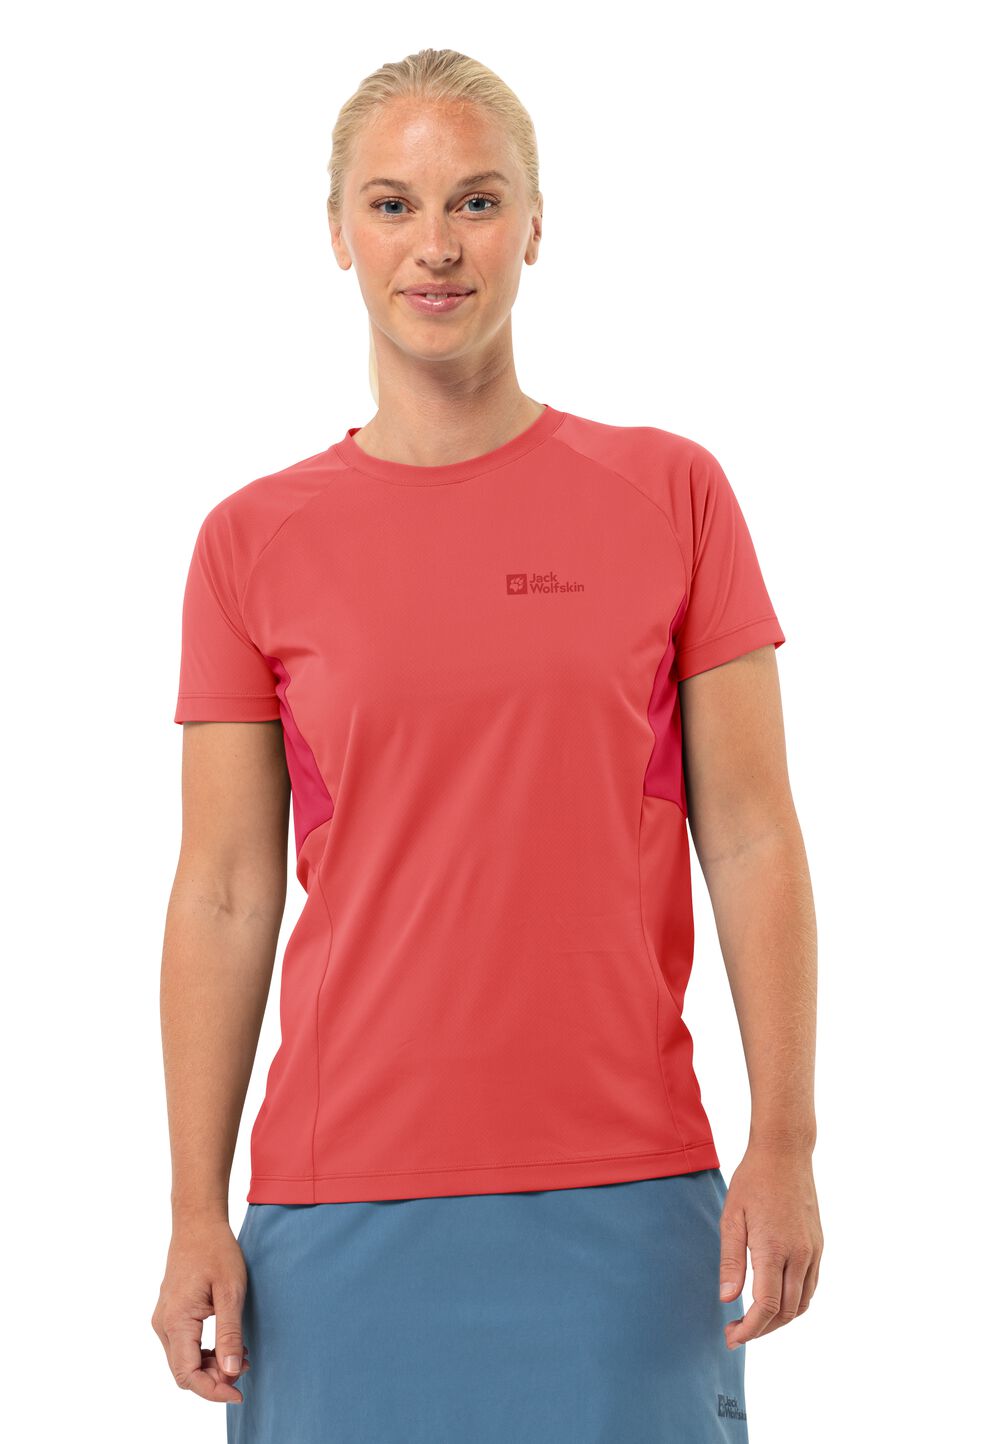 Jack Wolfskin Narrows T-Shirt Women Functioneel shirt Dames XXL rood vibrant red